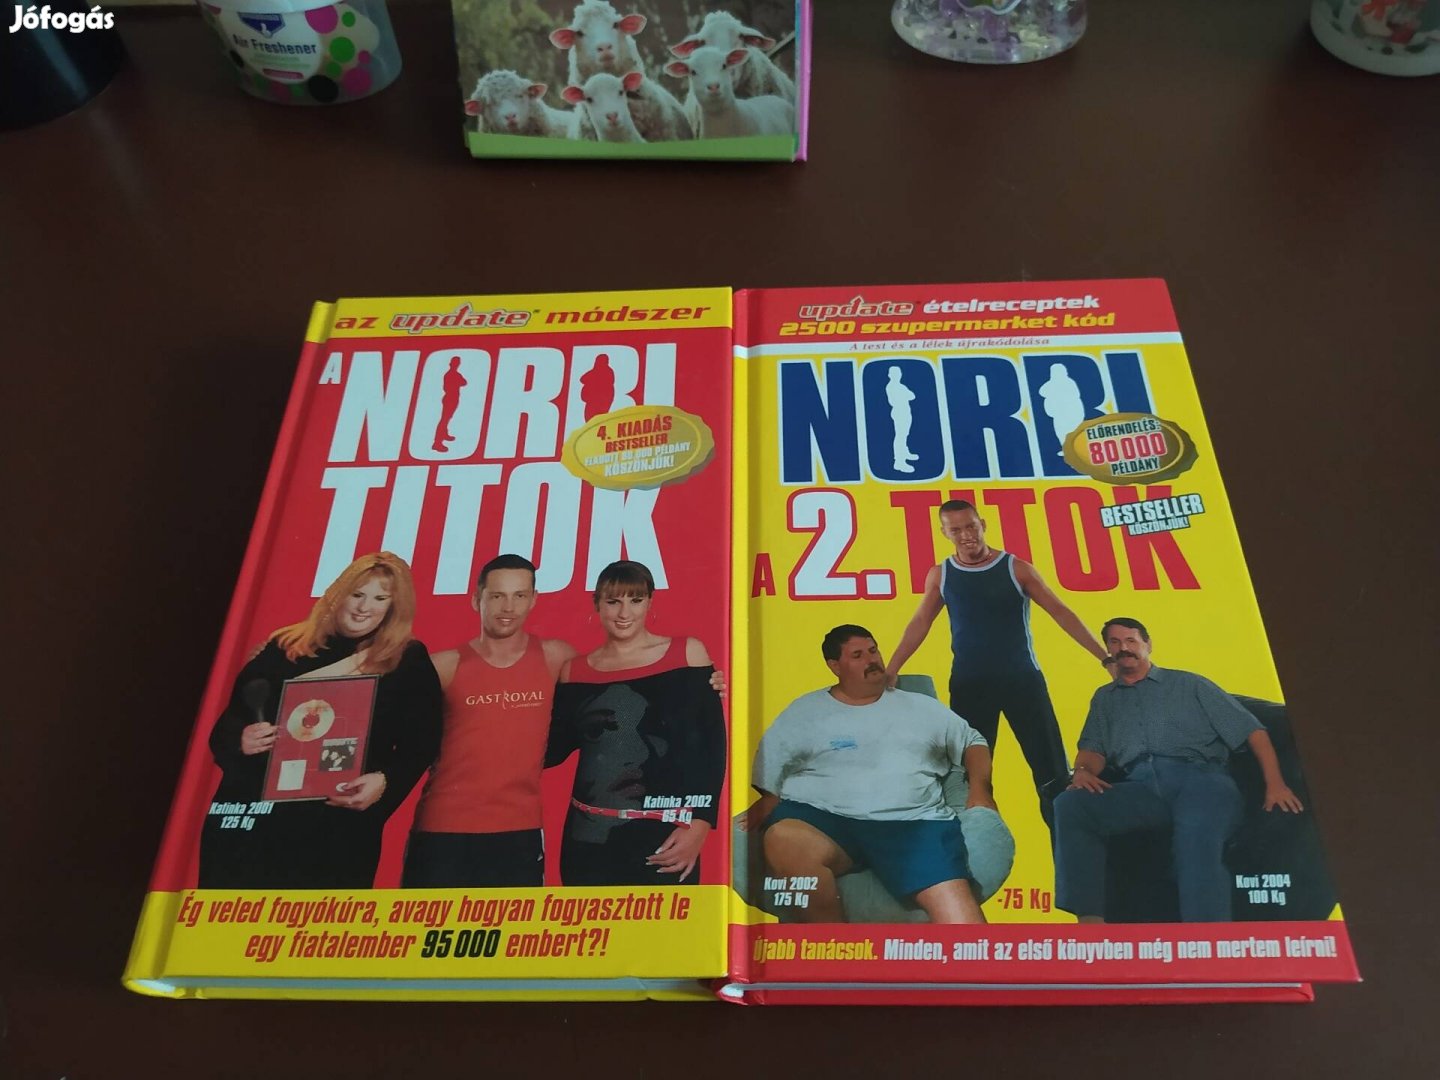 Norbi update könyvek 